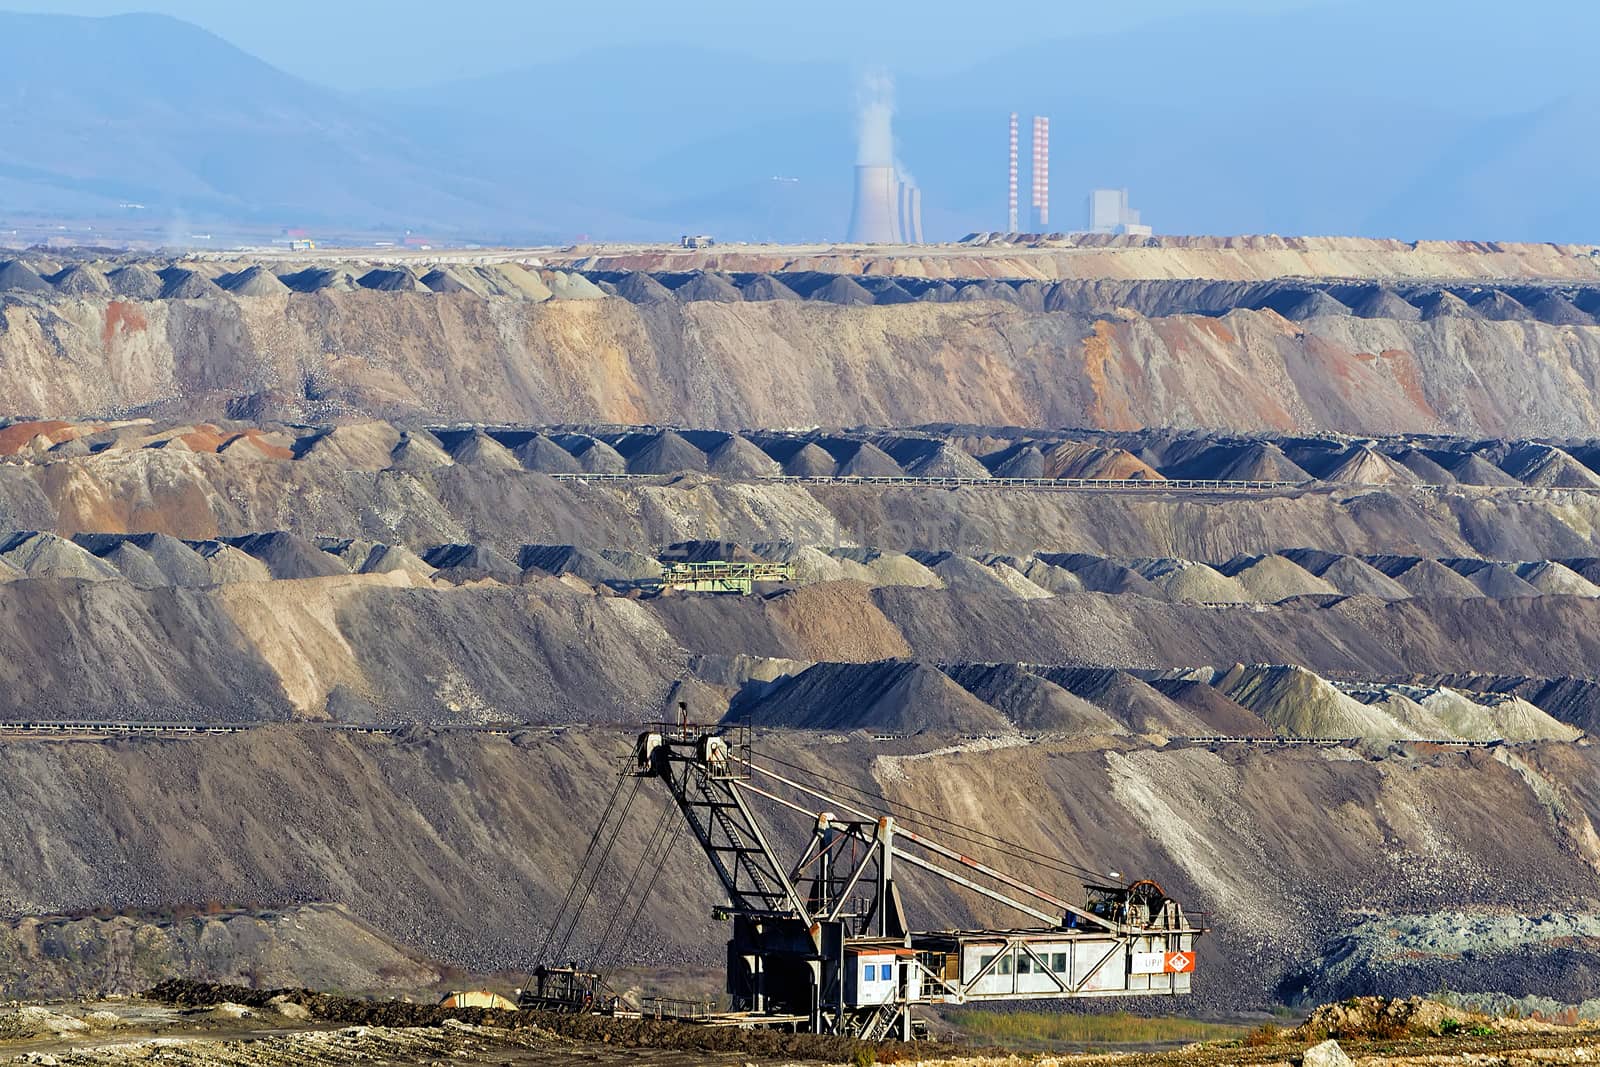 Very Large excavators at work in lignite (brown coal) mine in Kozani, Greece.